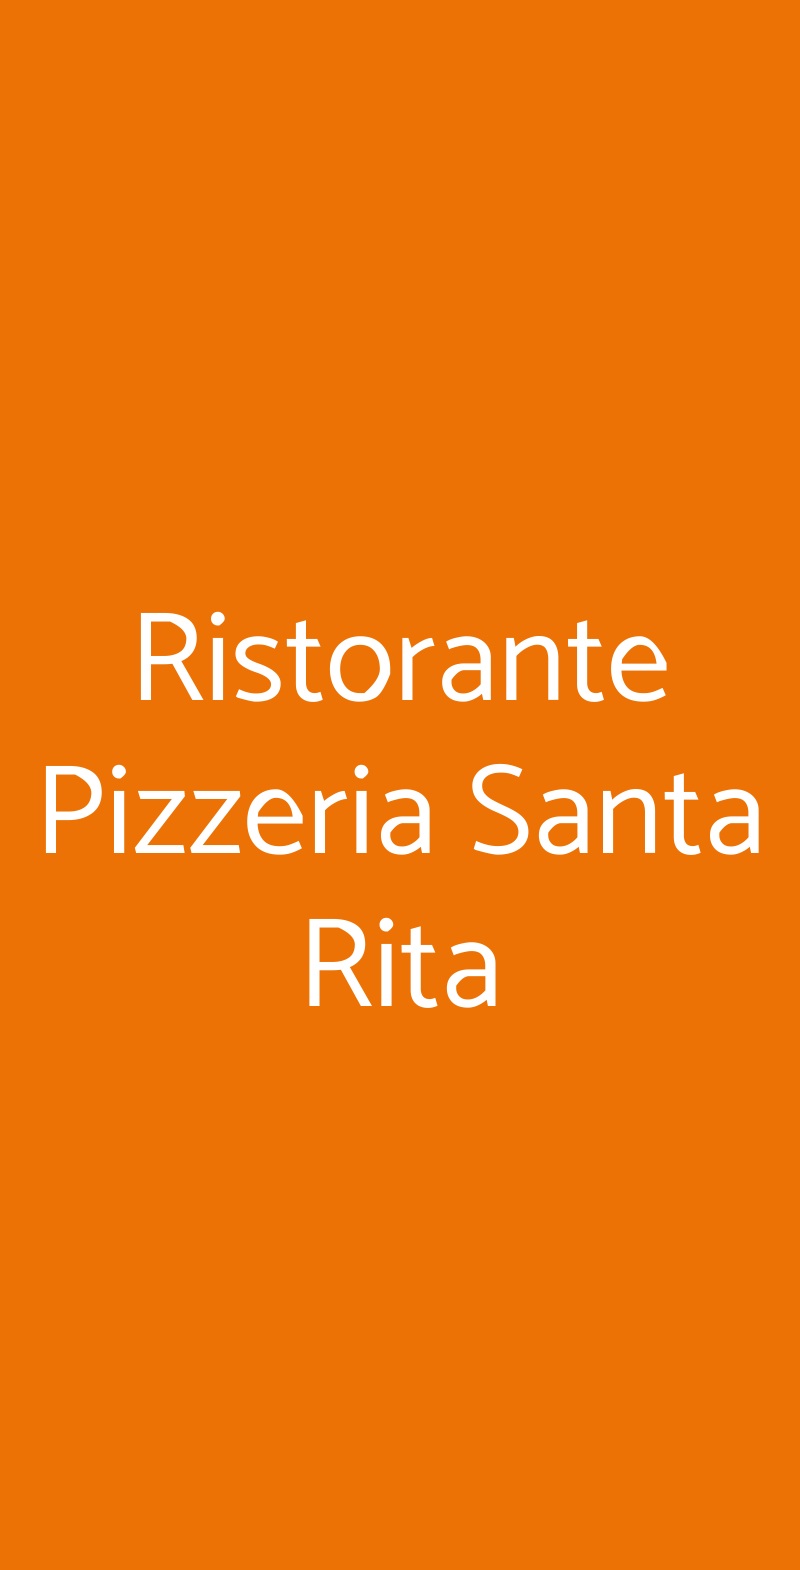 Ristorante Pizzeria Santa Rita Novara menù 1 pagina